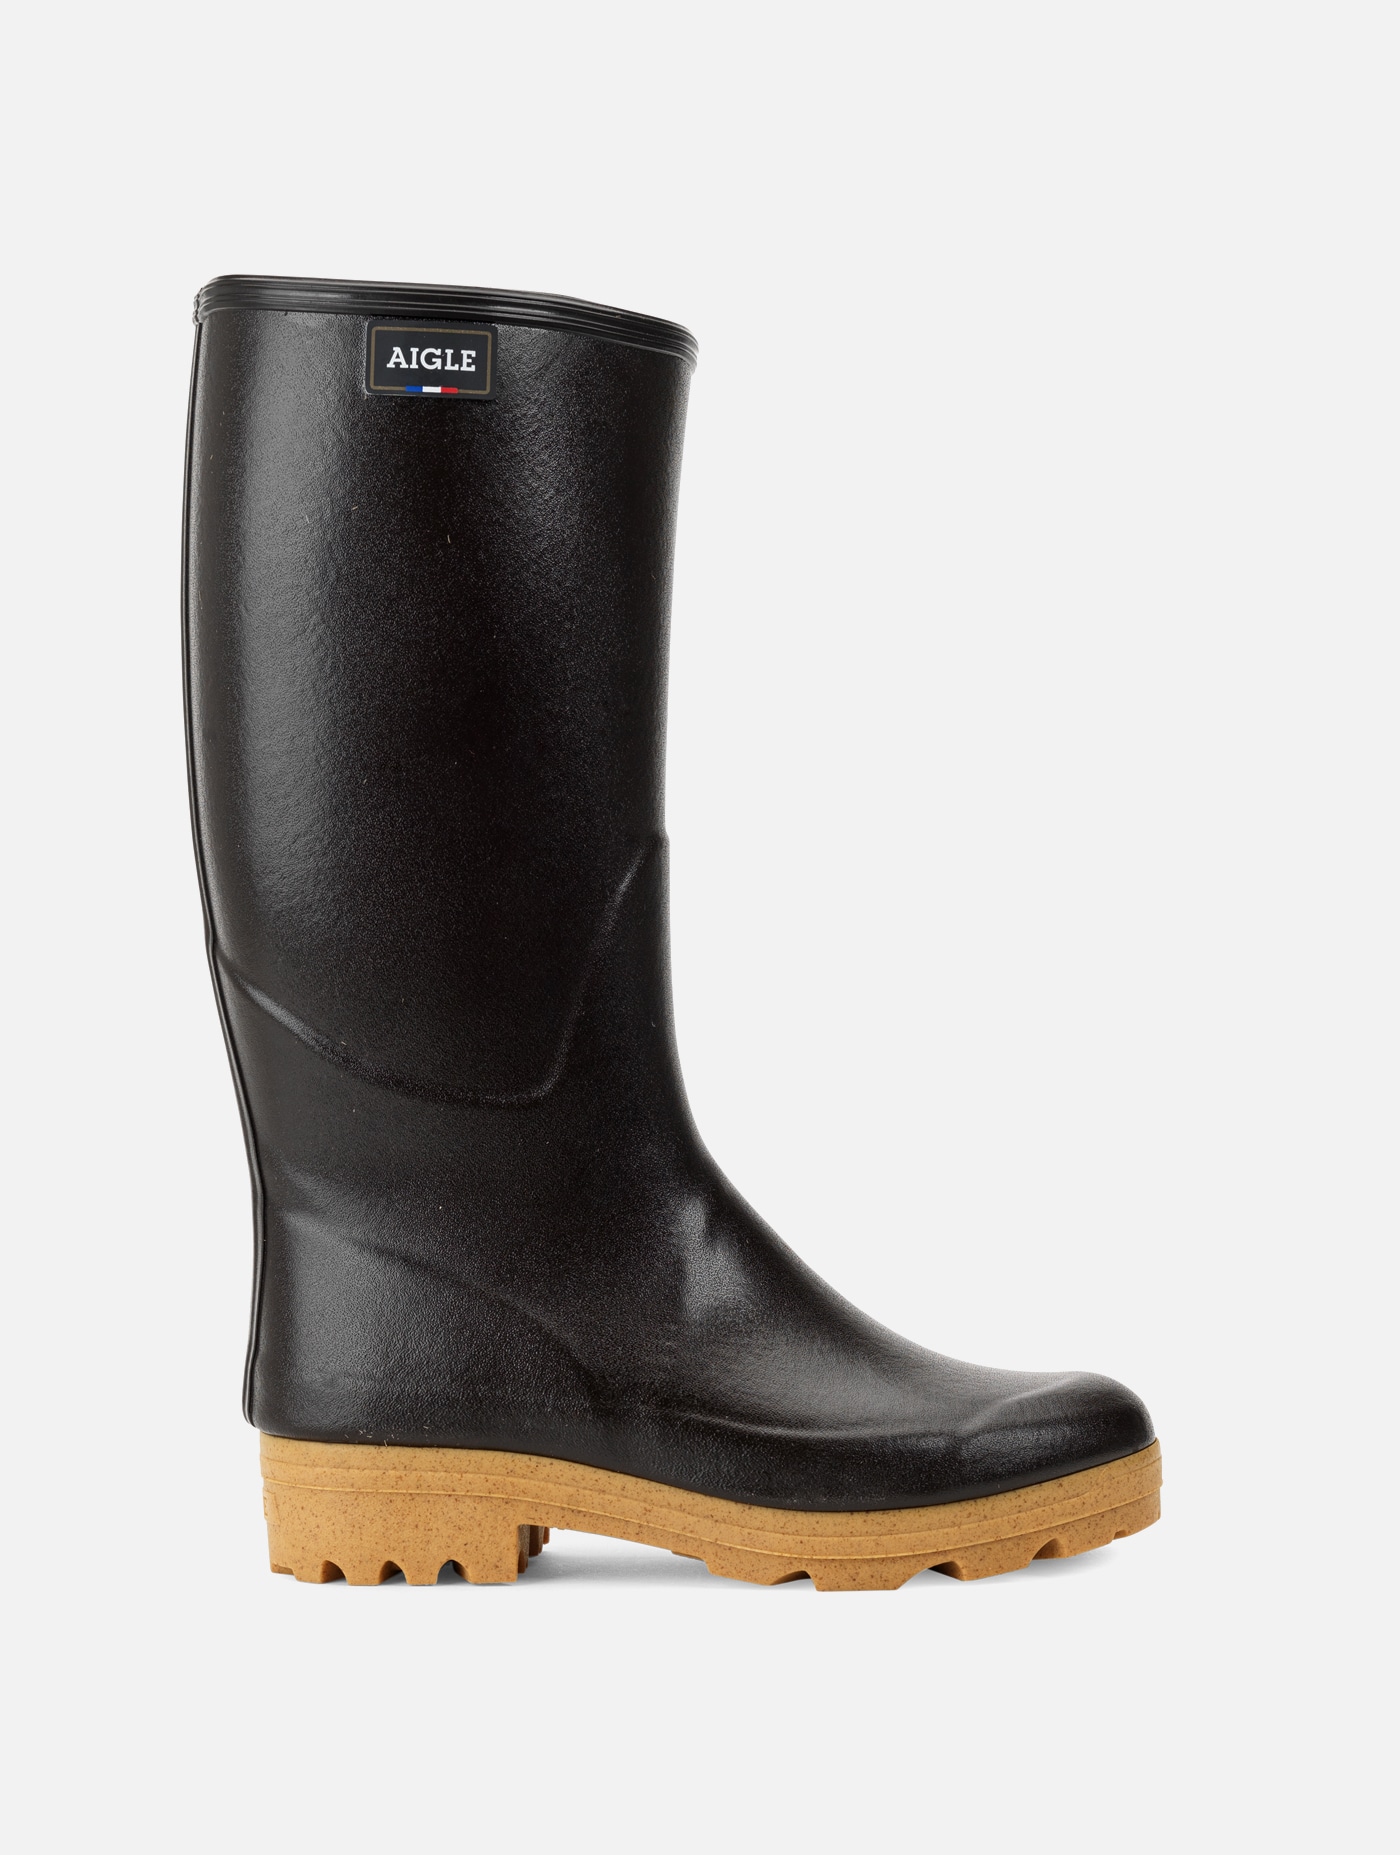 Aigle - Men's warm boots Brun - Chambord promen | AIGLE